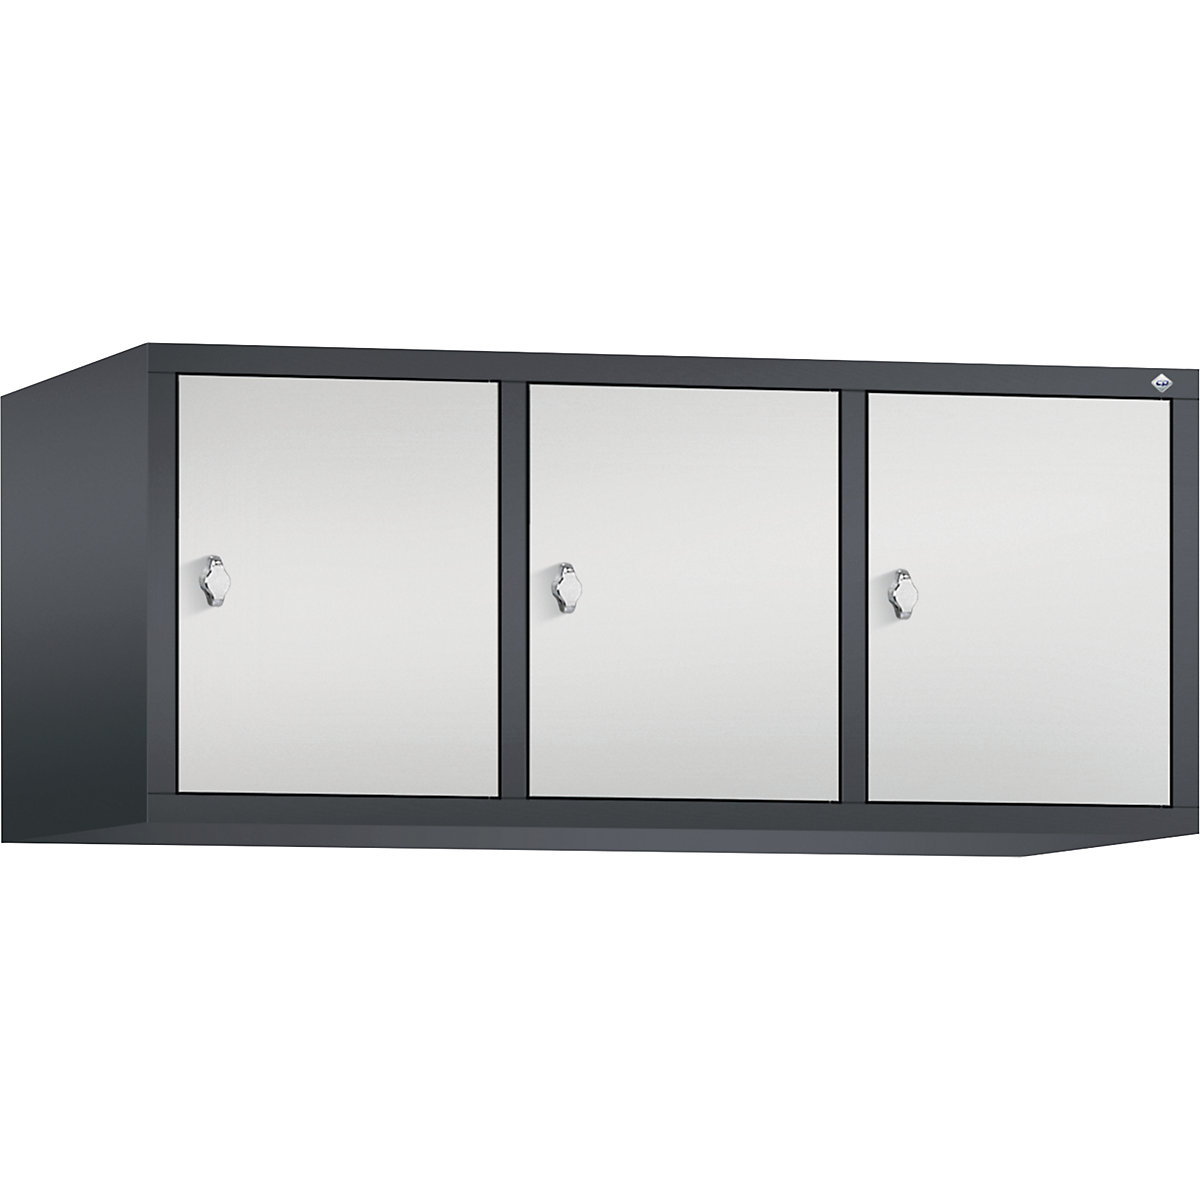 C+P – Altillo CLASSIC, 3 compartimentos, anchura de compartimento 400 mm, gris negruzco / gris luminoso